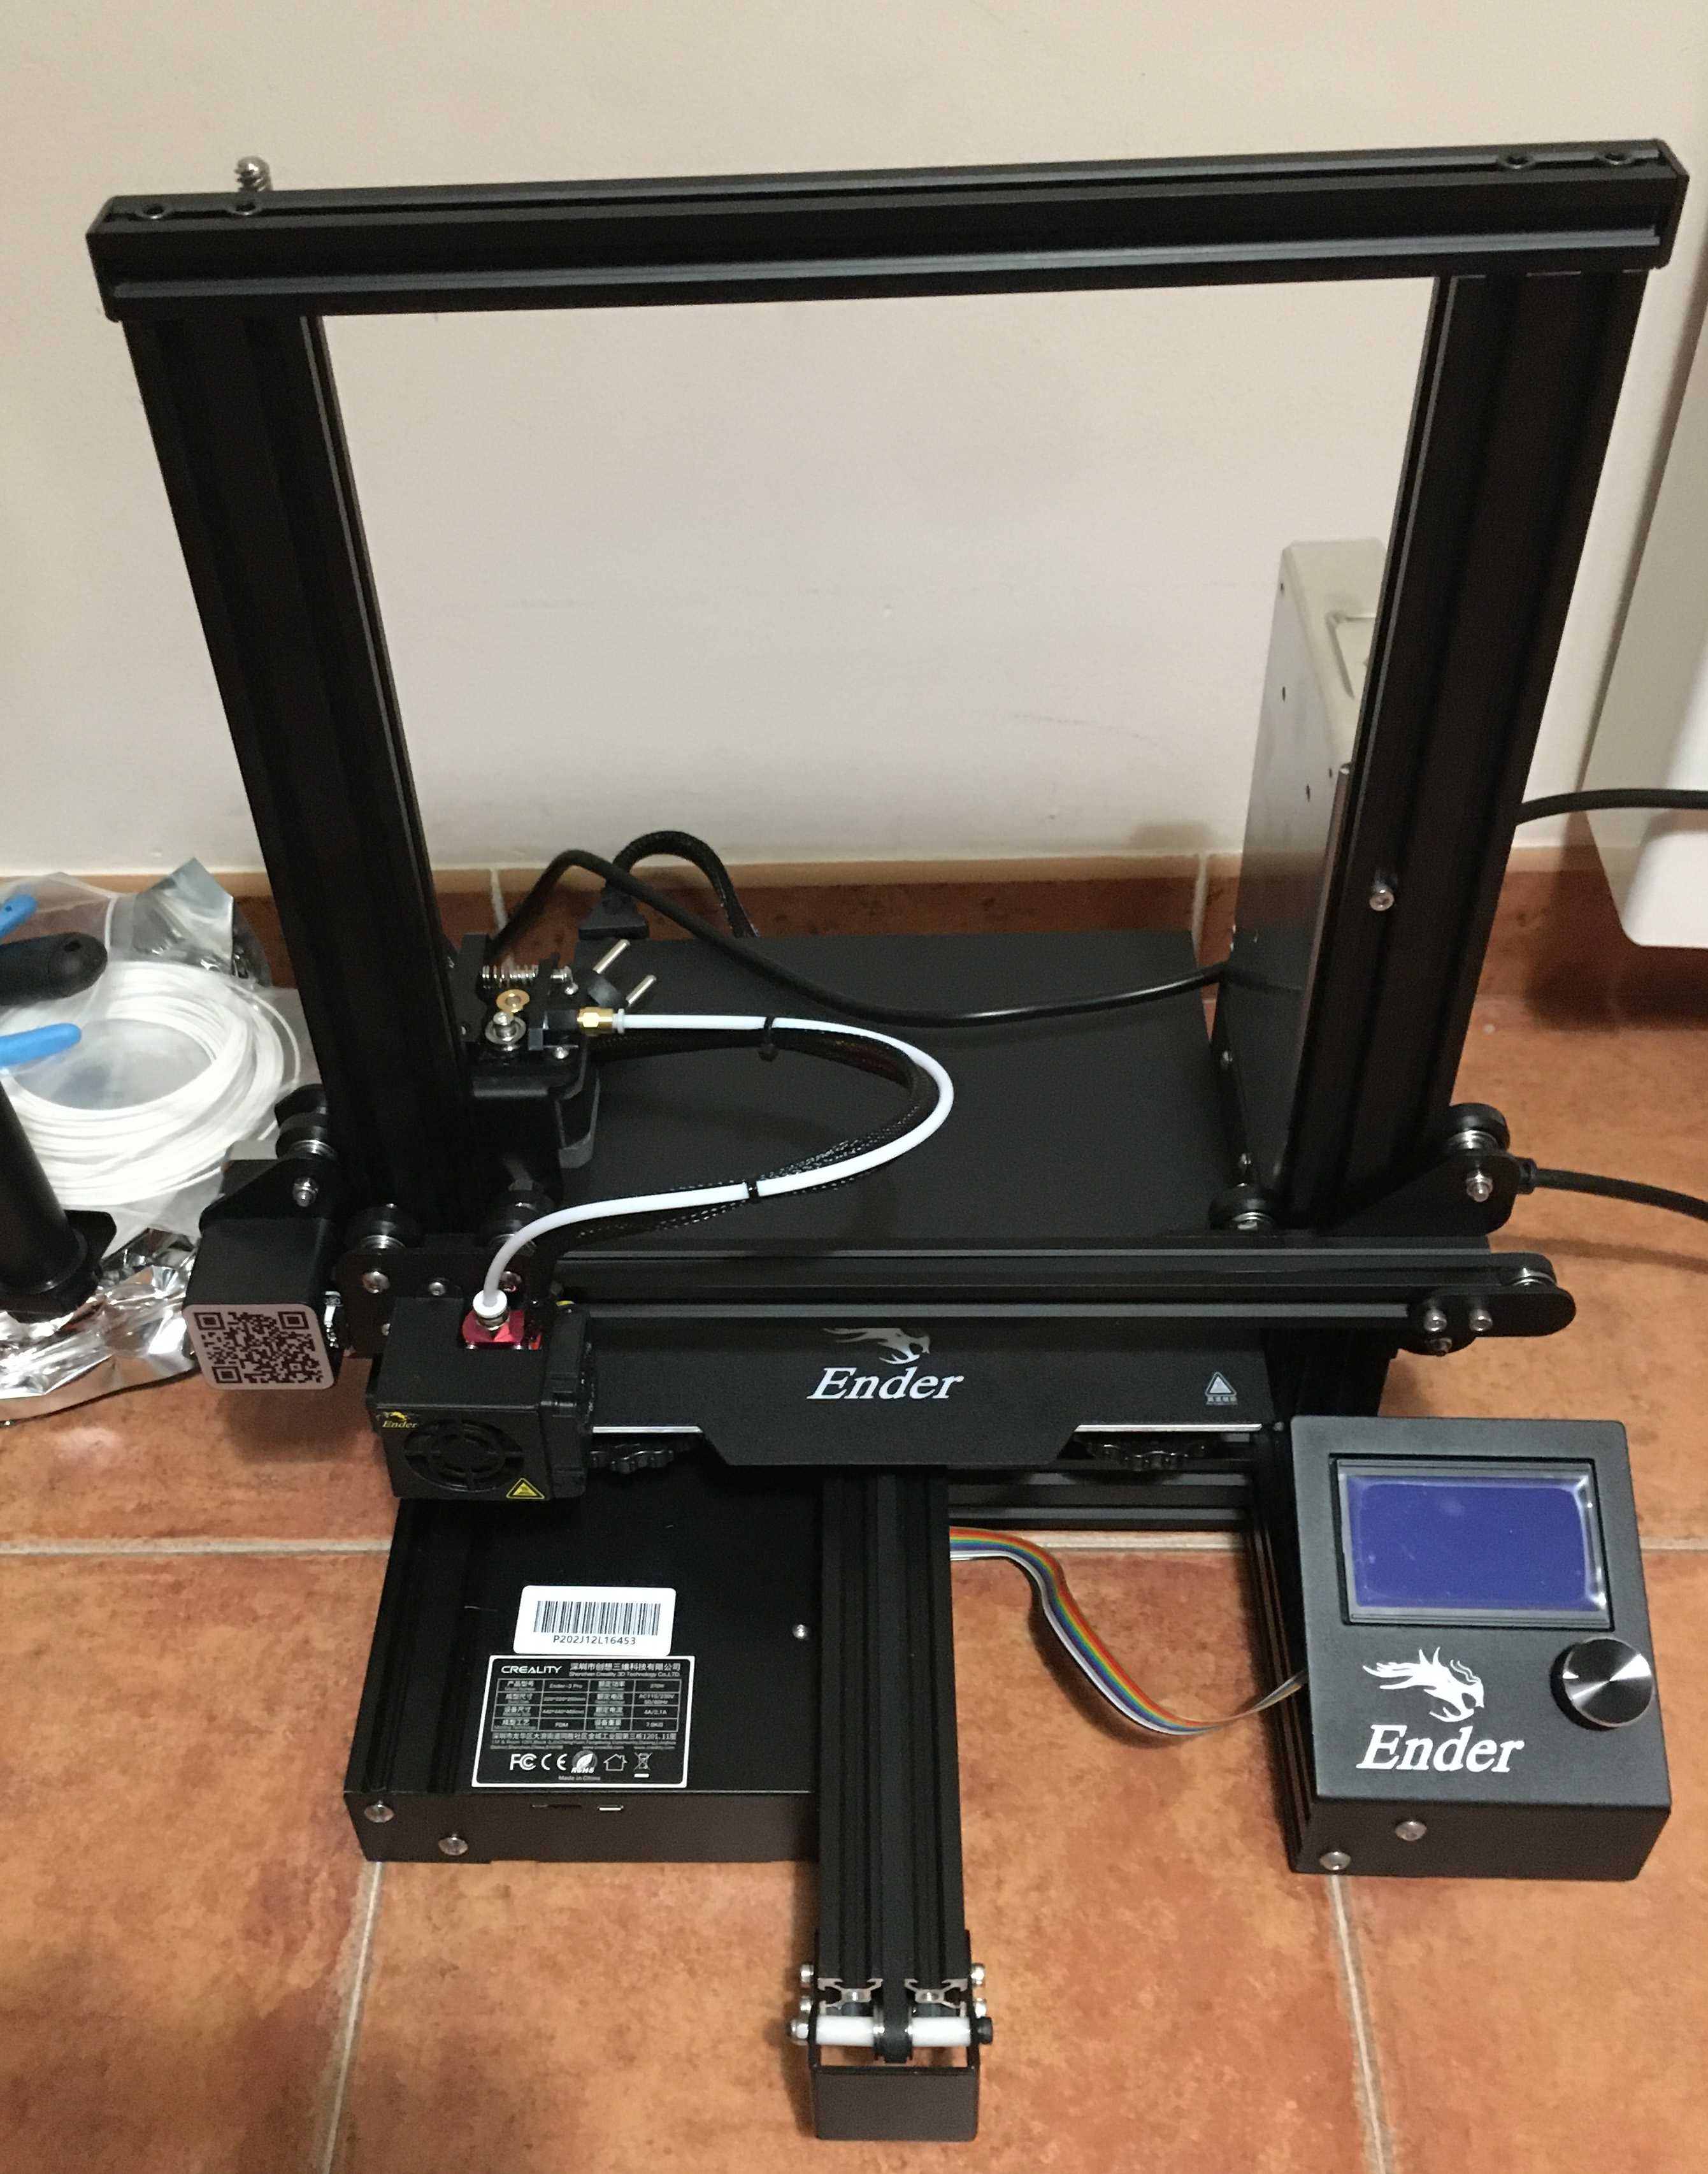 Imagen que muestra una impresora 3D